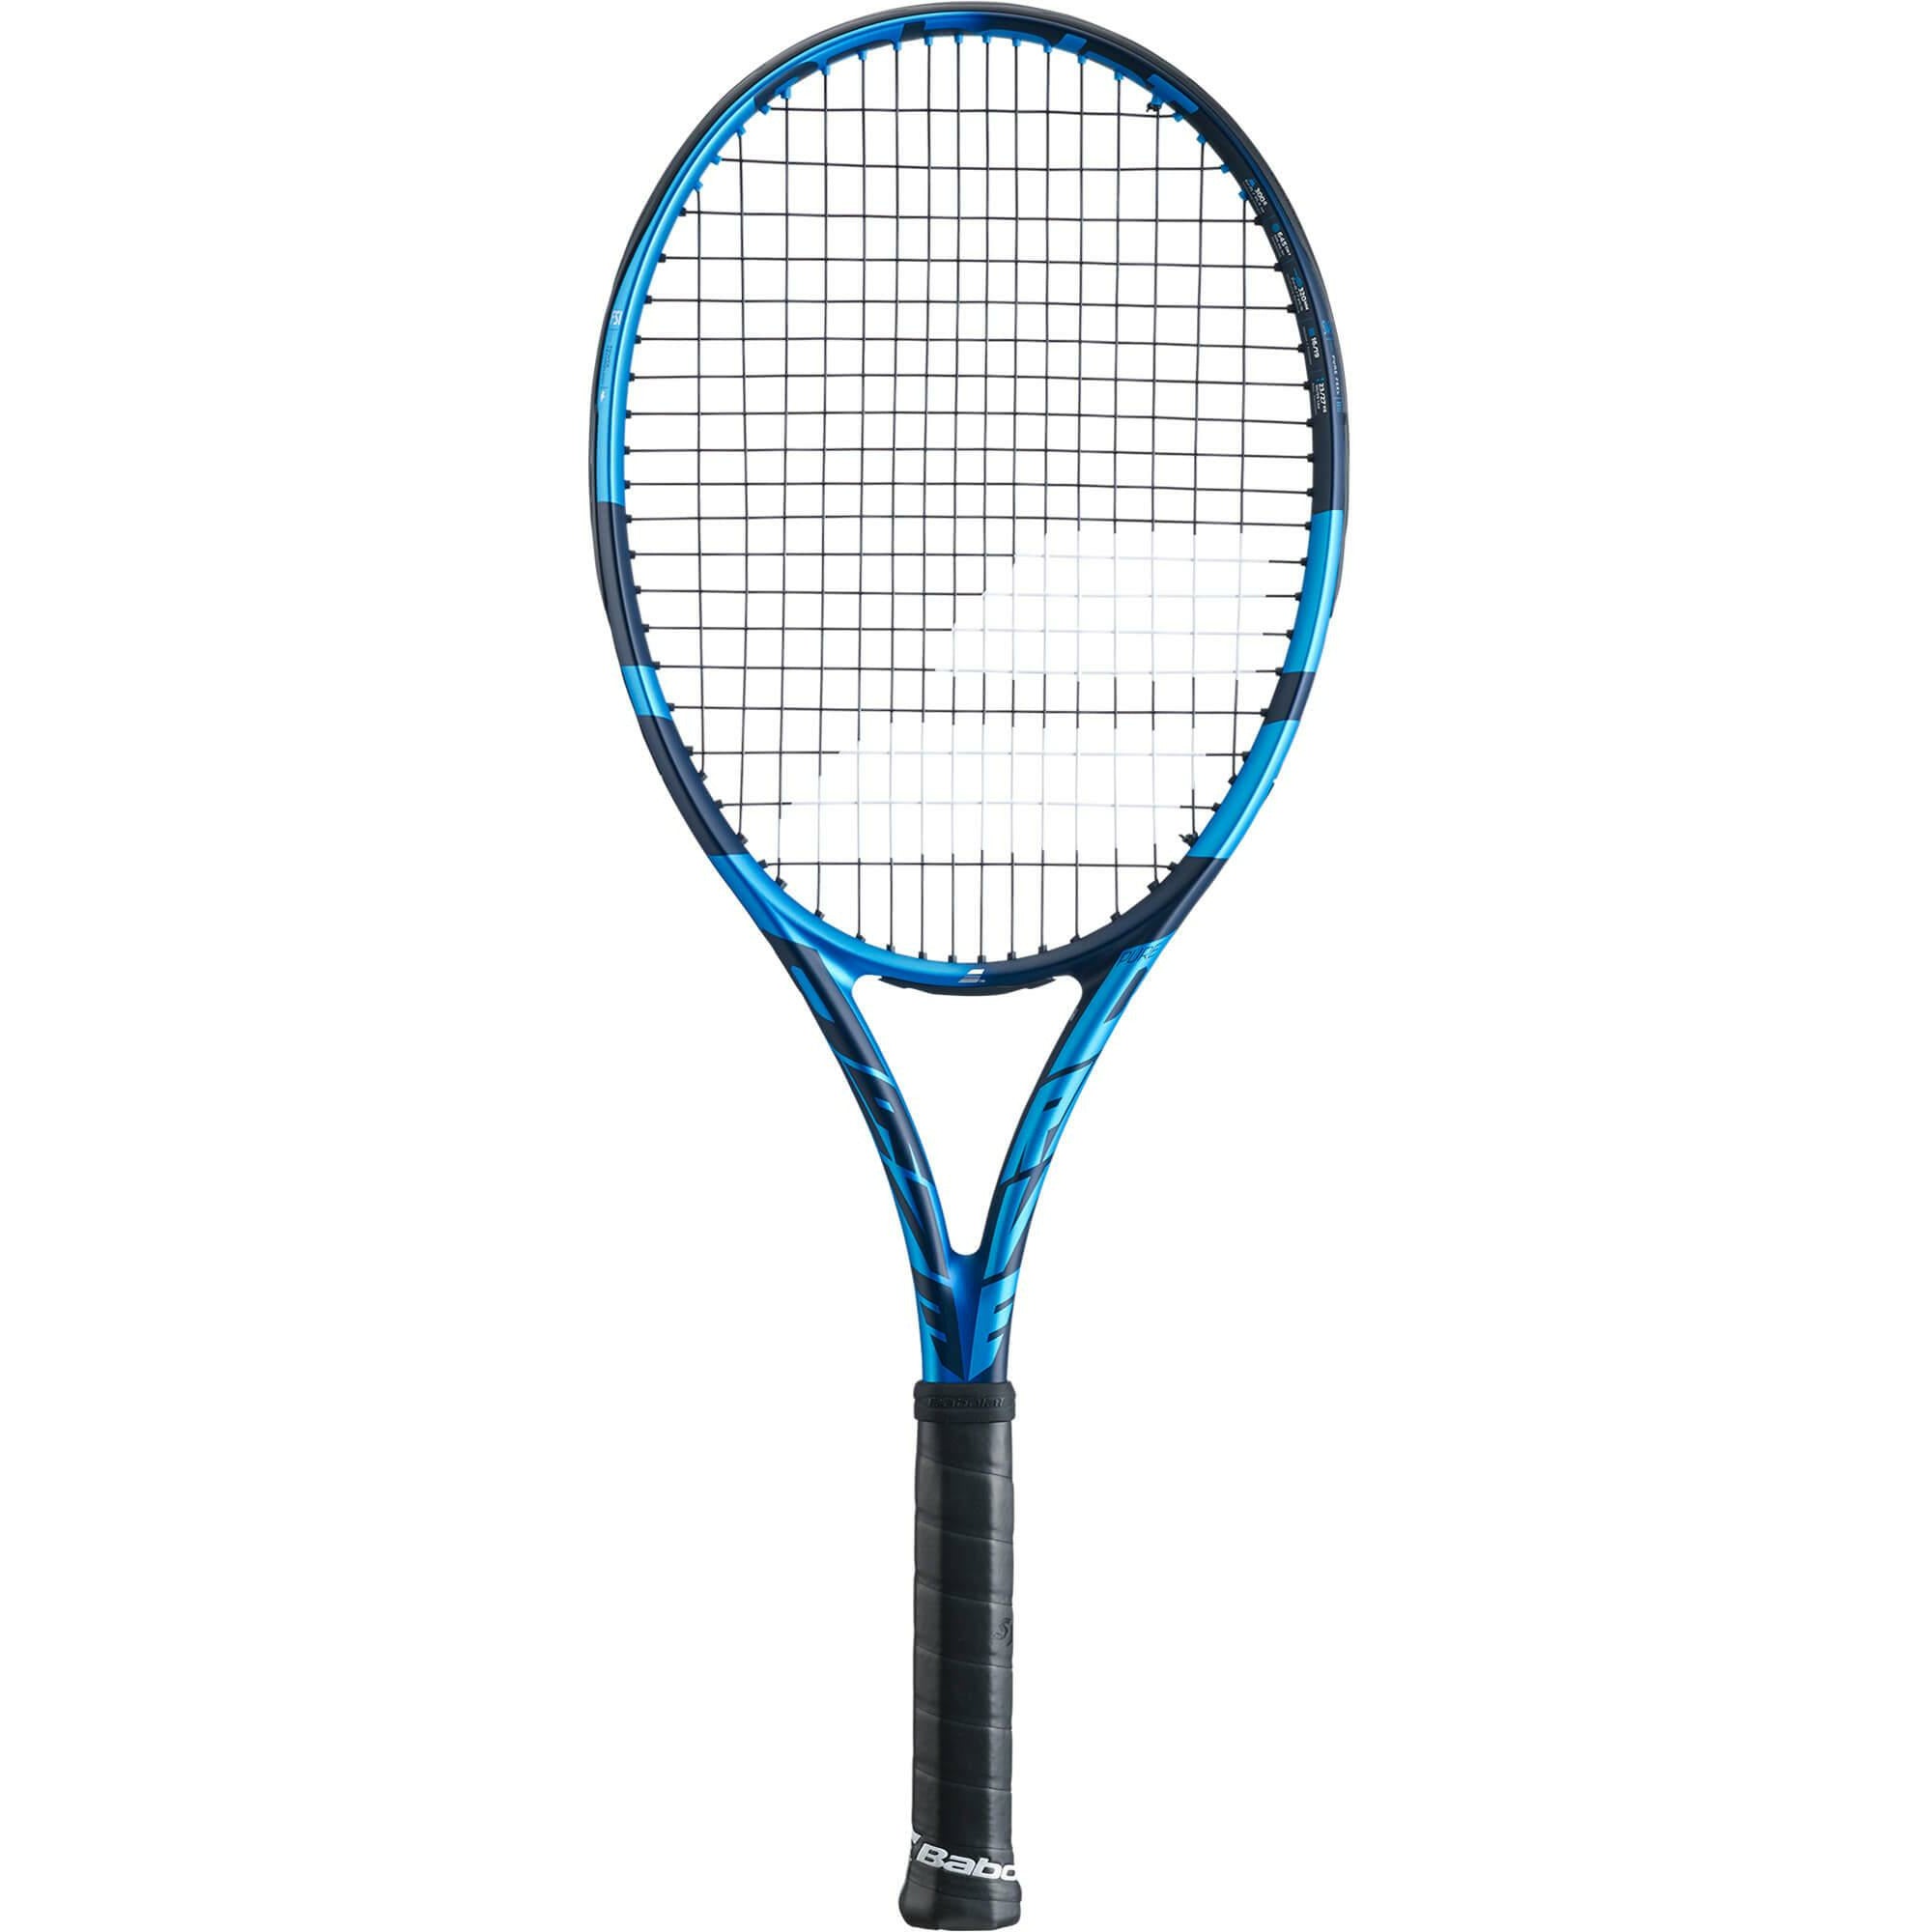 Buy Babolat Tennis Rackets Online | Tennis Racquets - Smash Racket Pro